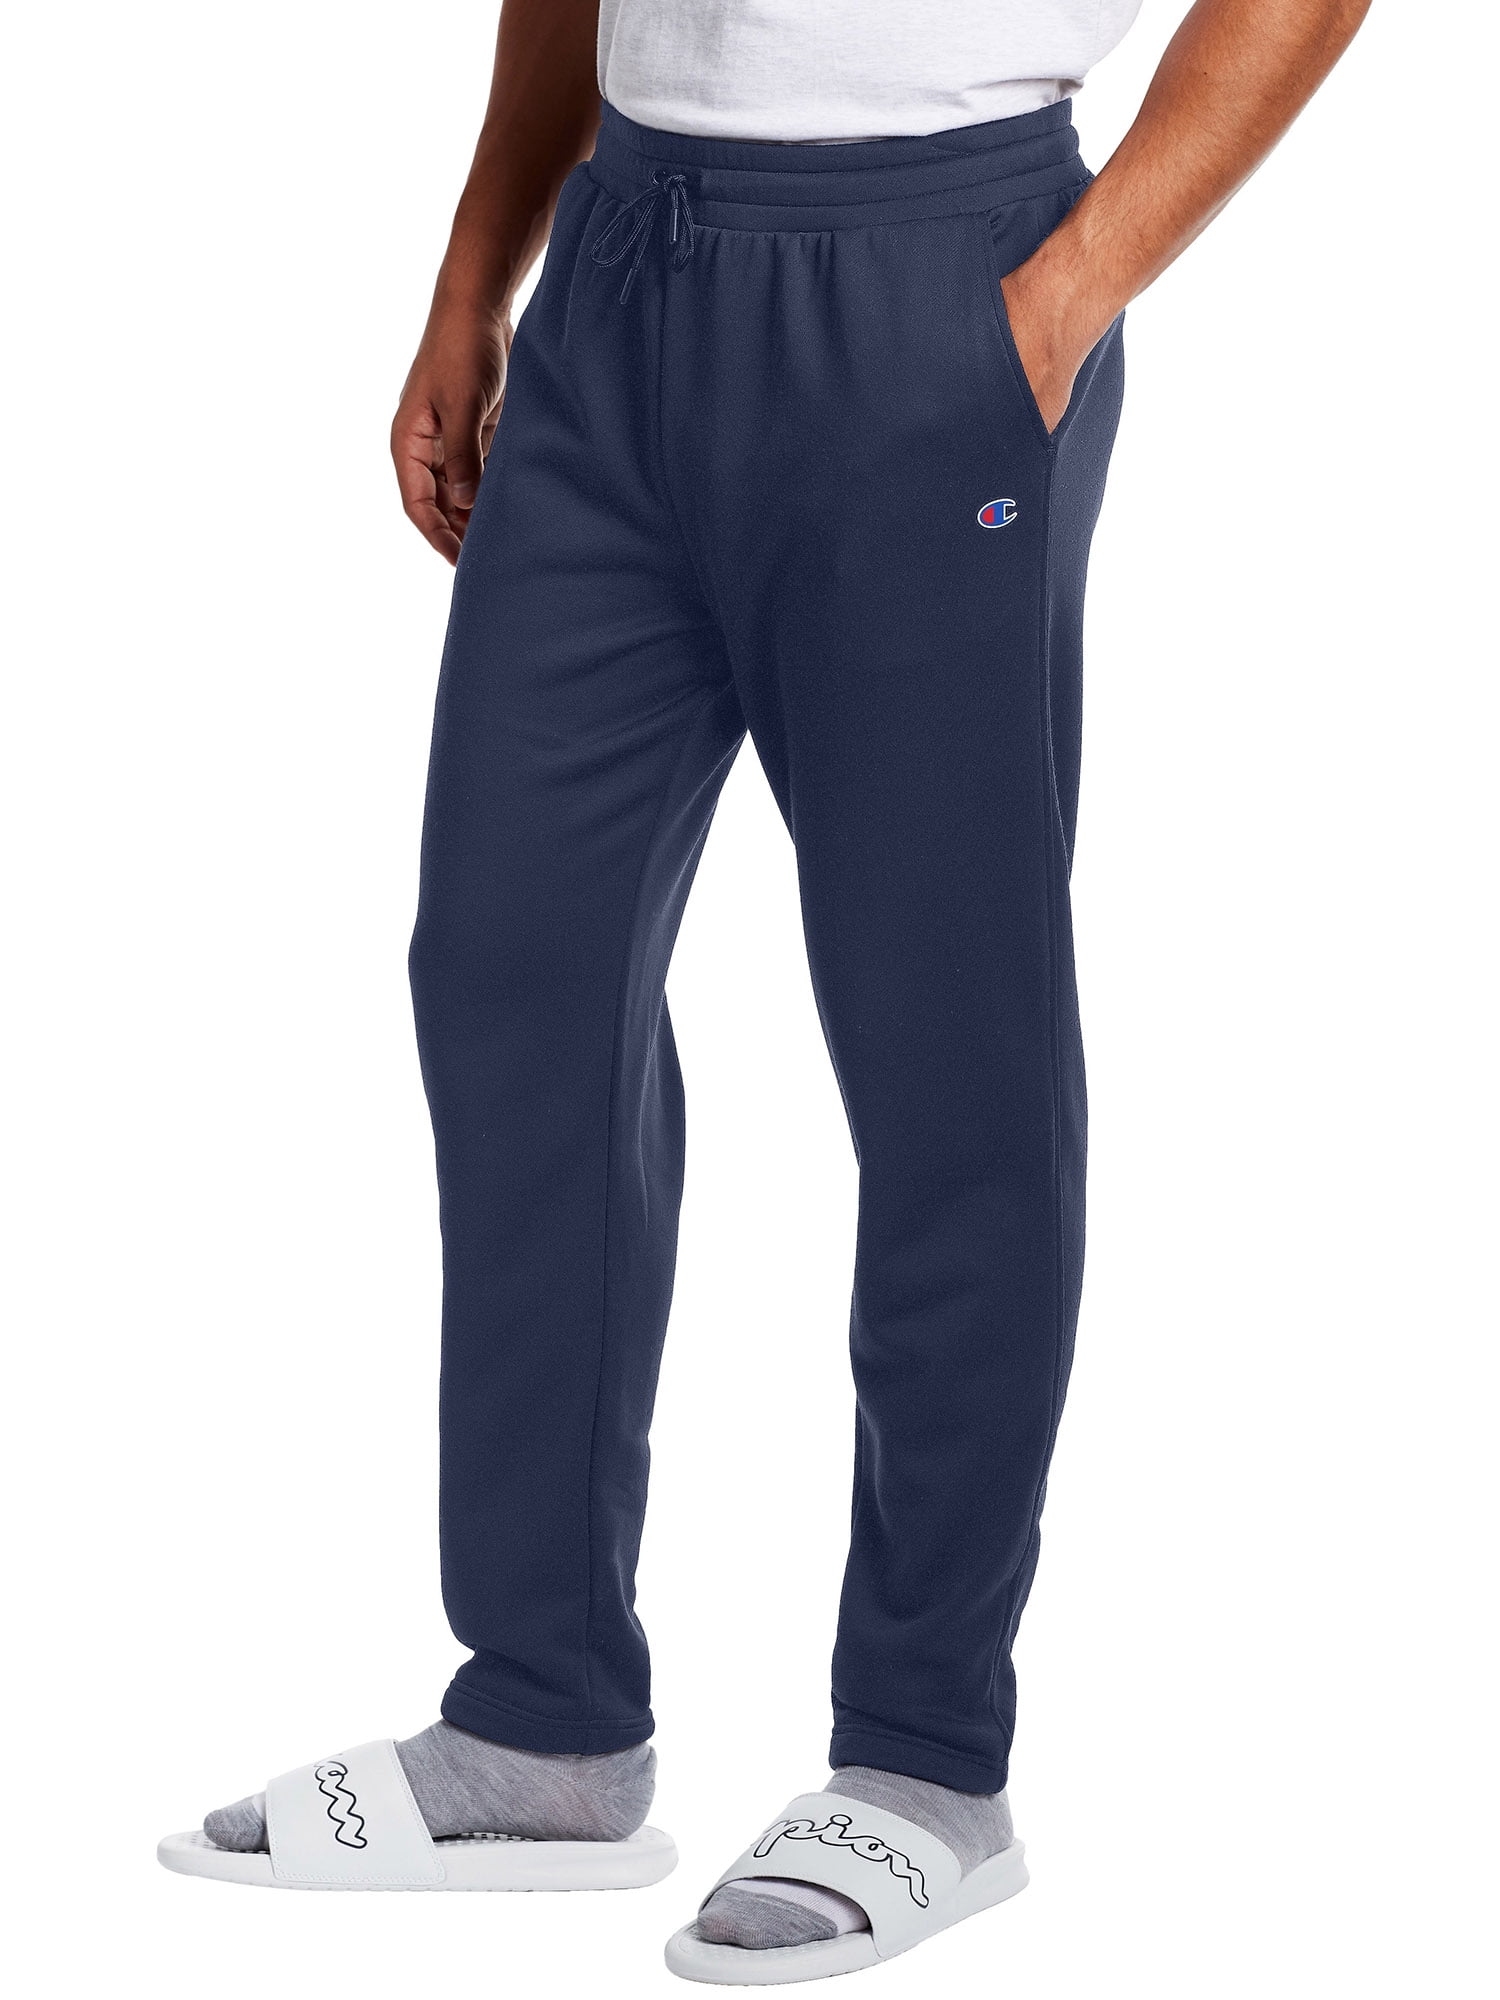 Champion - Champion Men’s Sport Pants, up to Size 2XL - Walmart.com ...